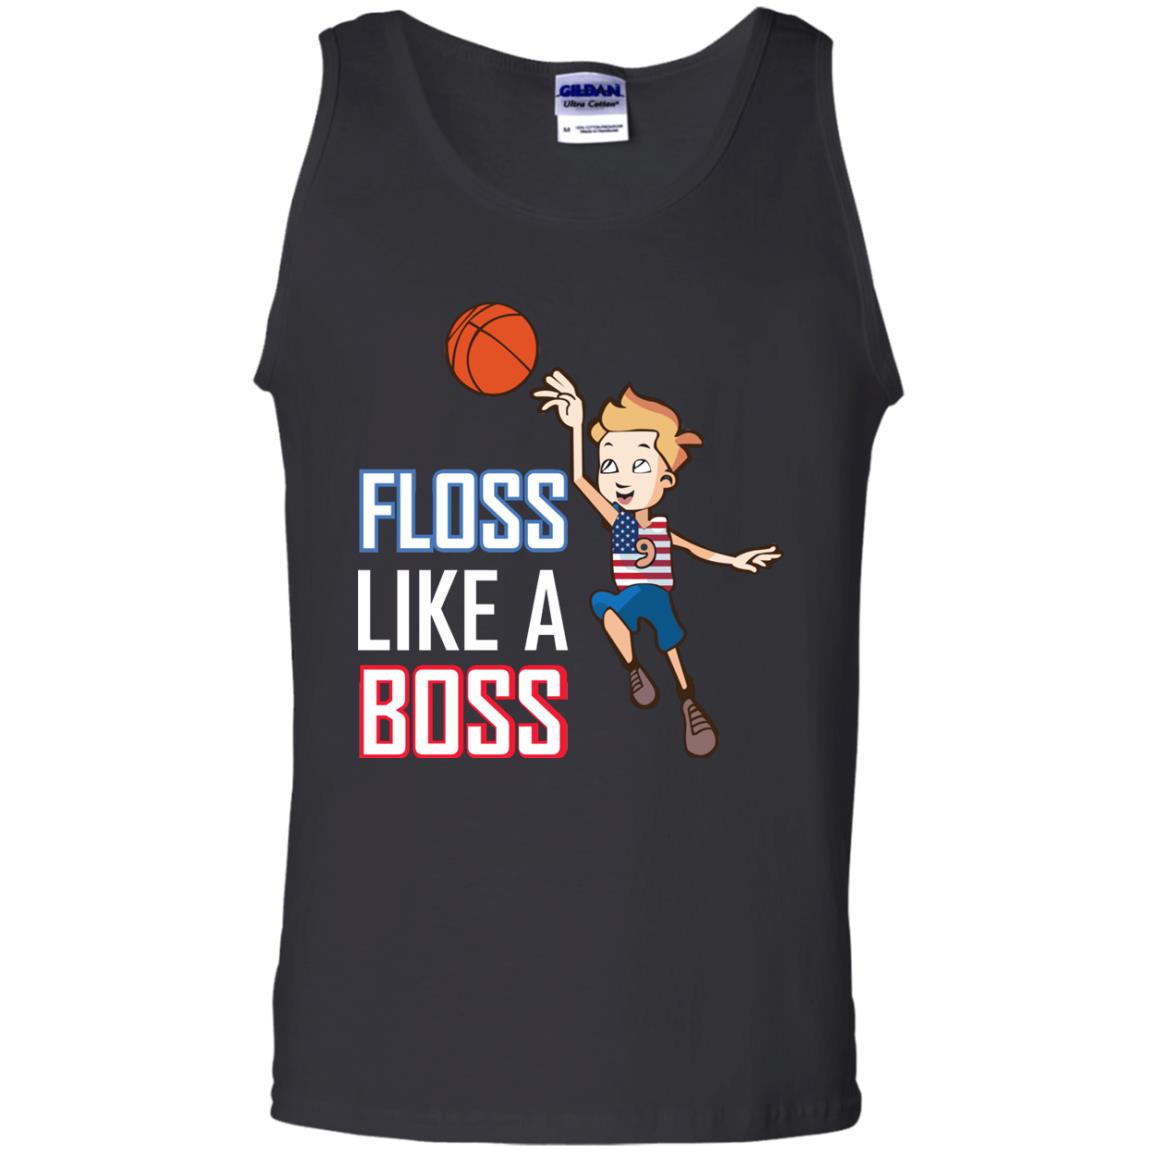 Floss Like A Boss Shirt For Basketball PlayersG220 Gildan 100% Cotton Tank Top